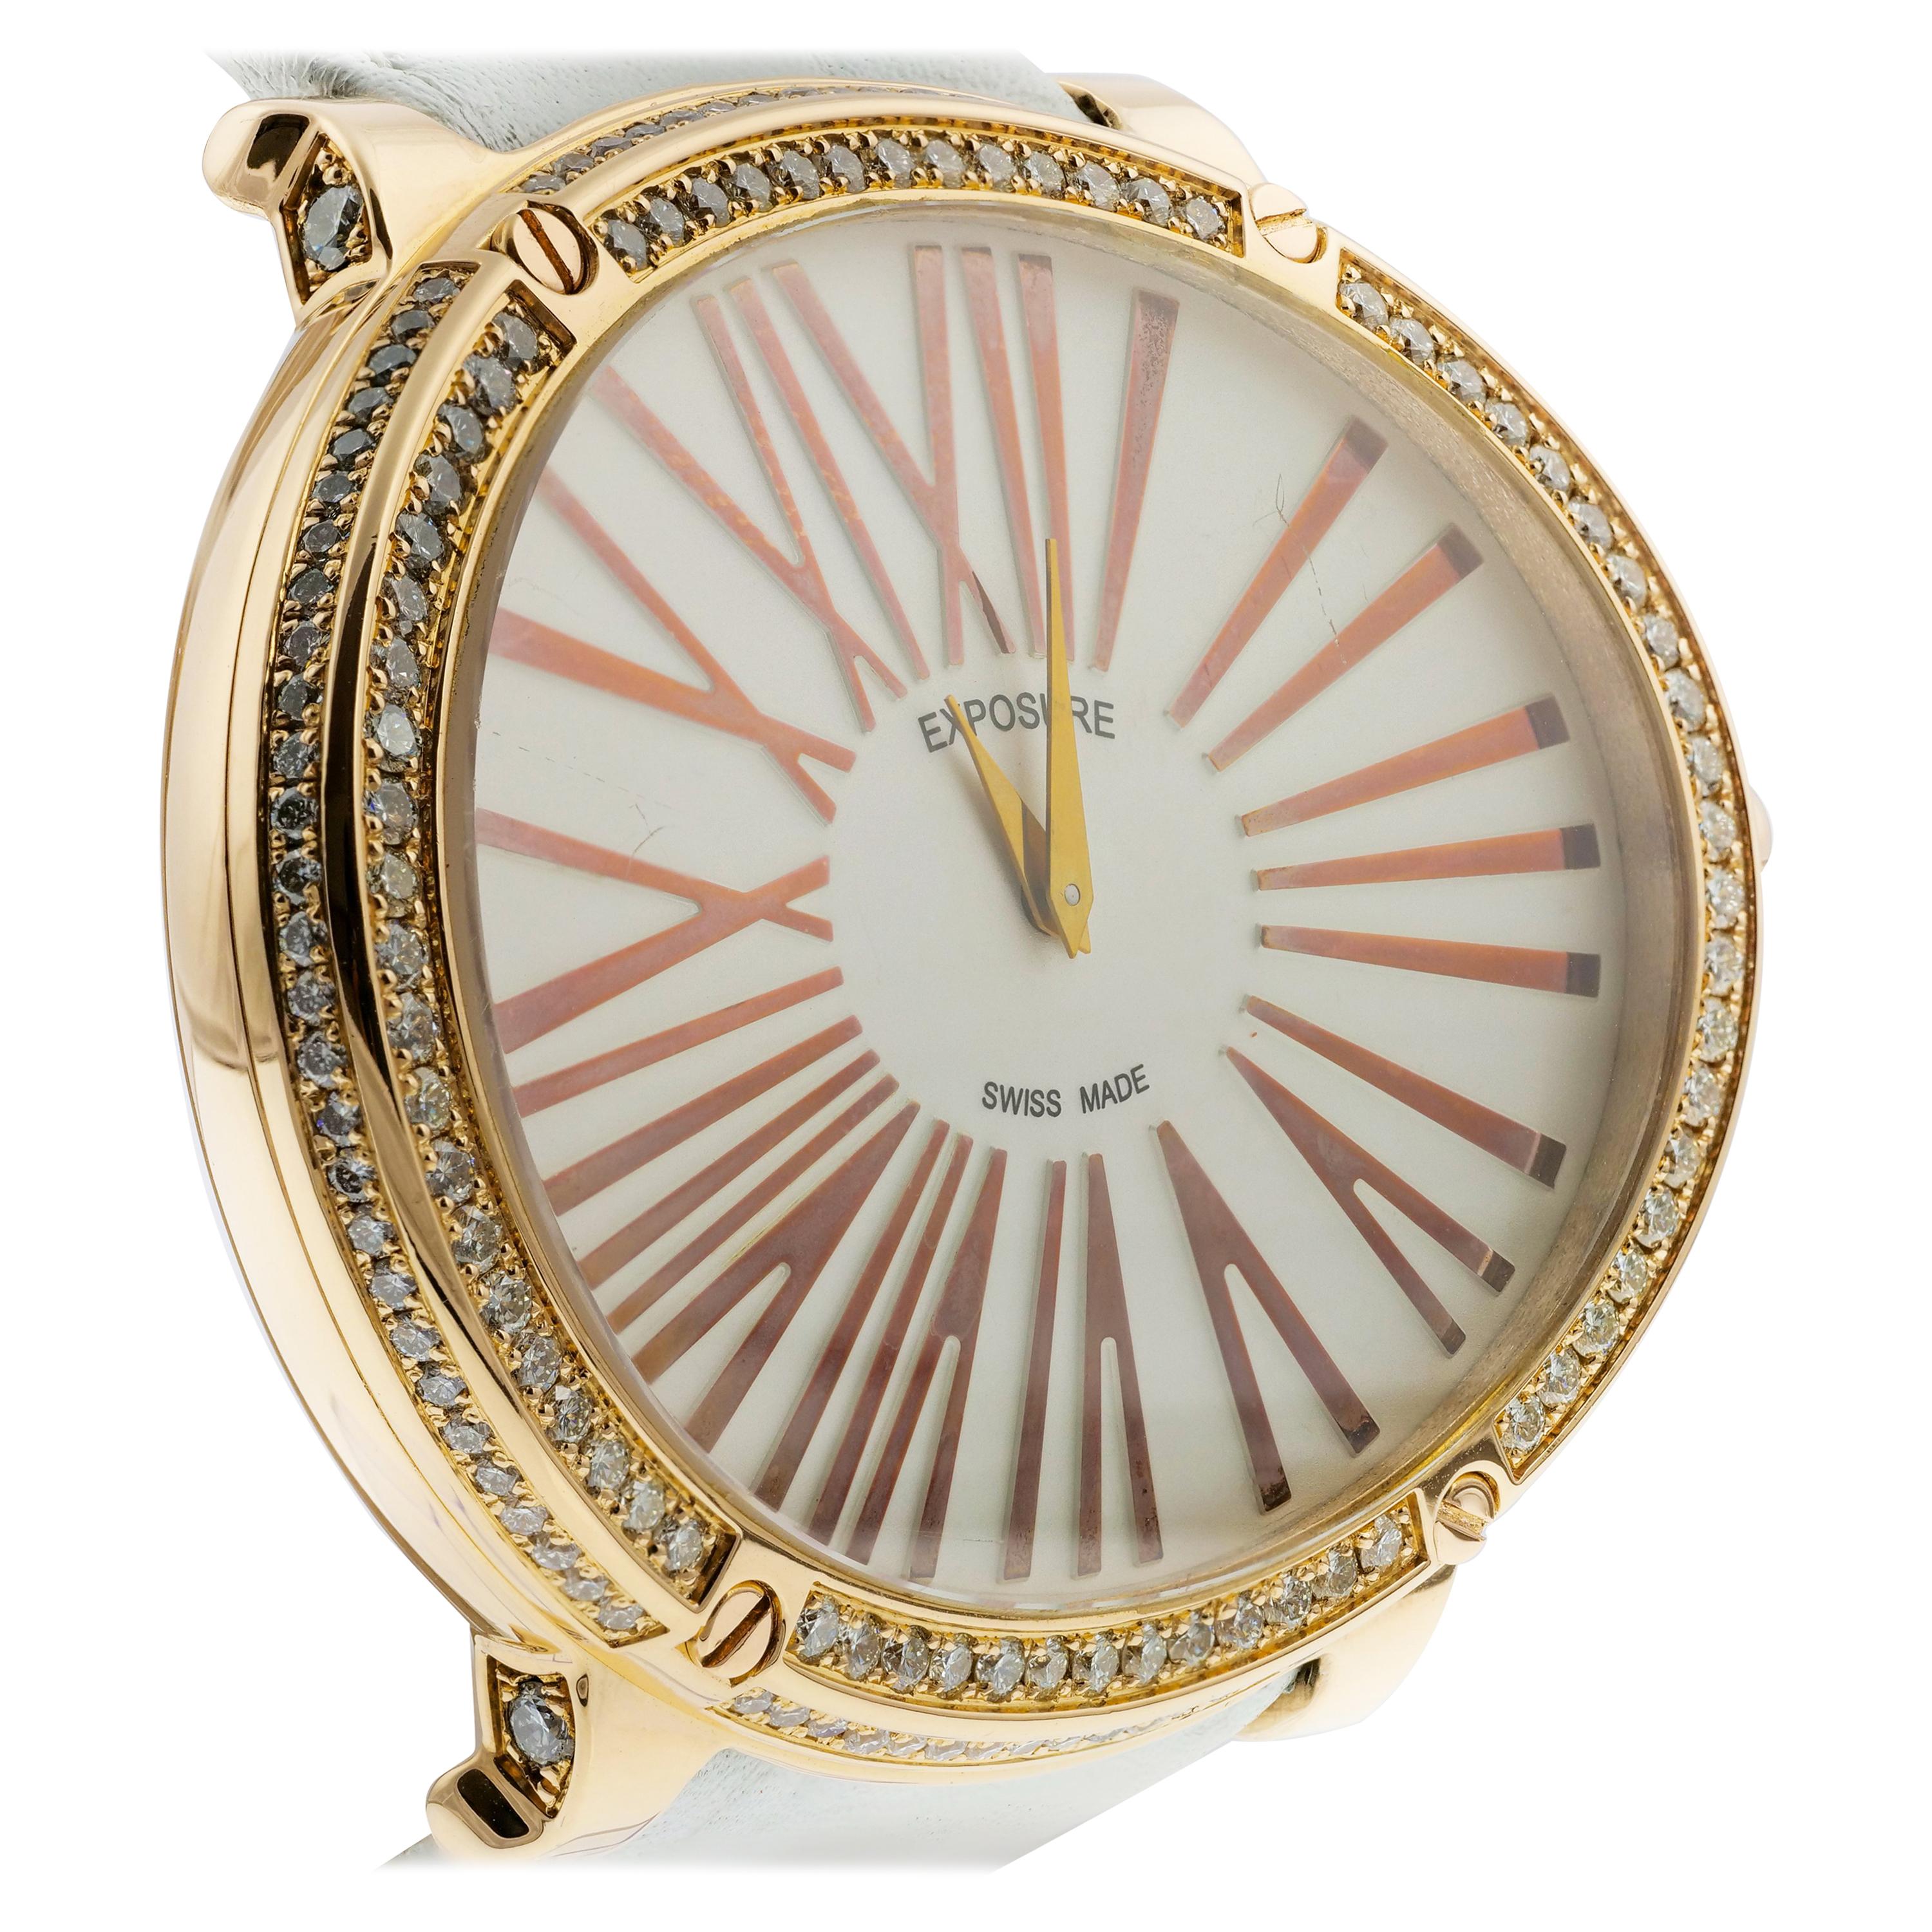 Exposure Diamonds Uhr, in 18 K Gelbgold, Quarz, großformatig